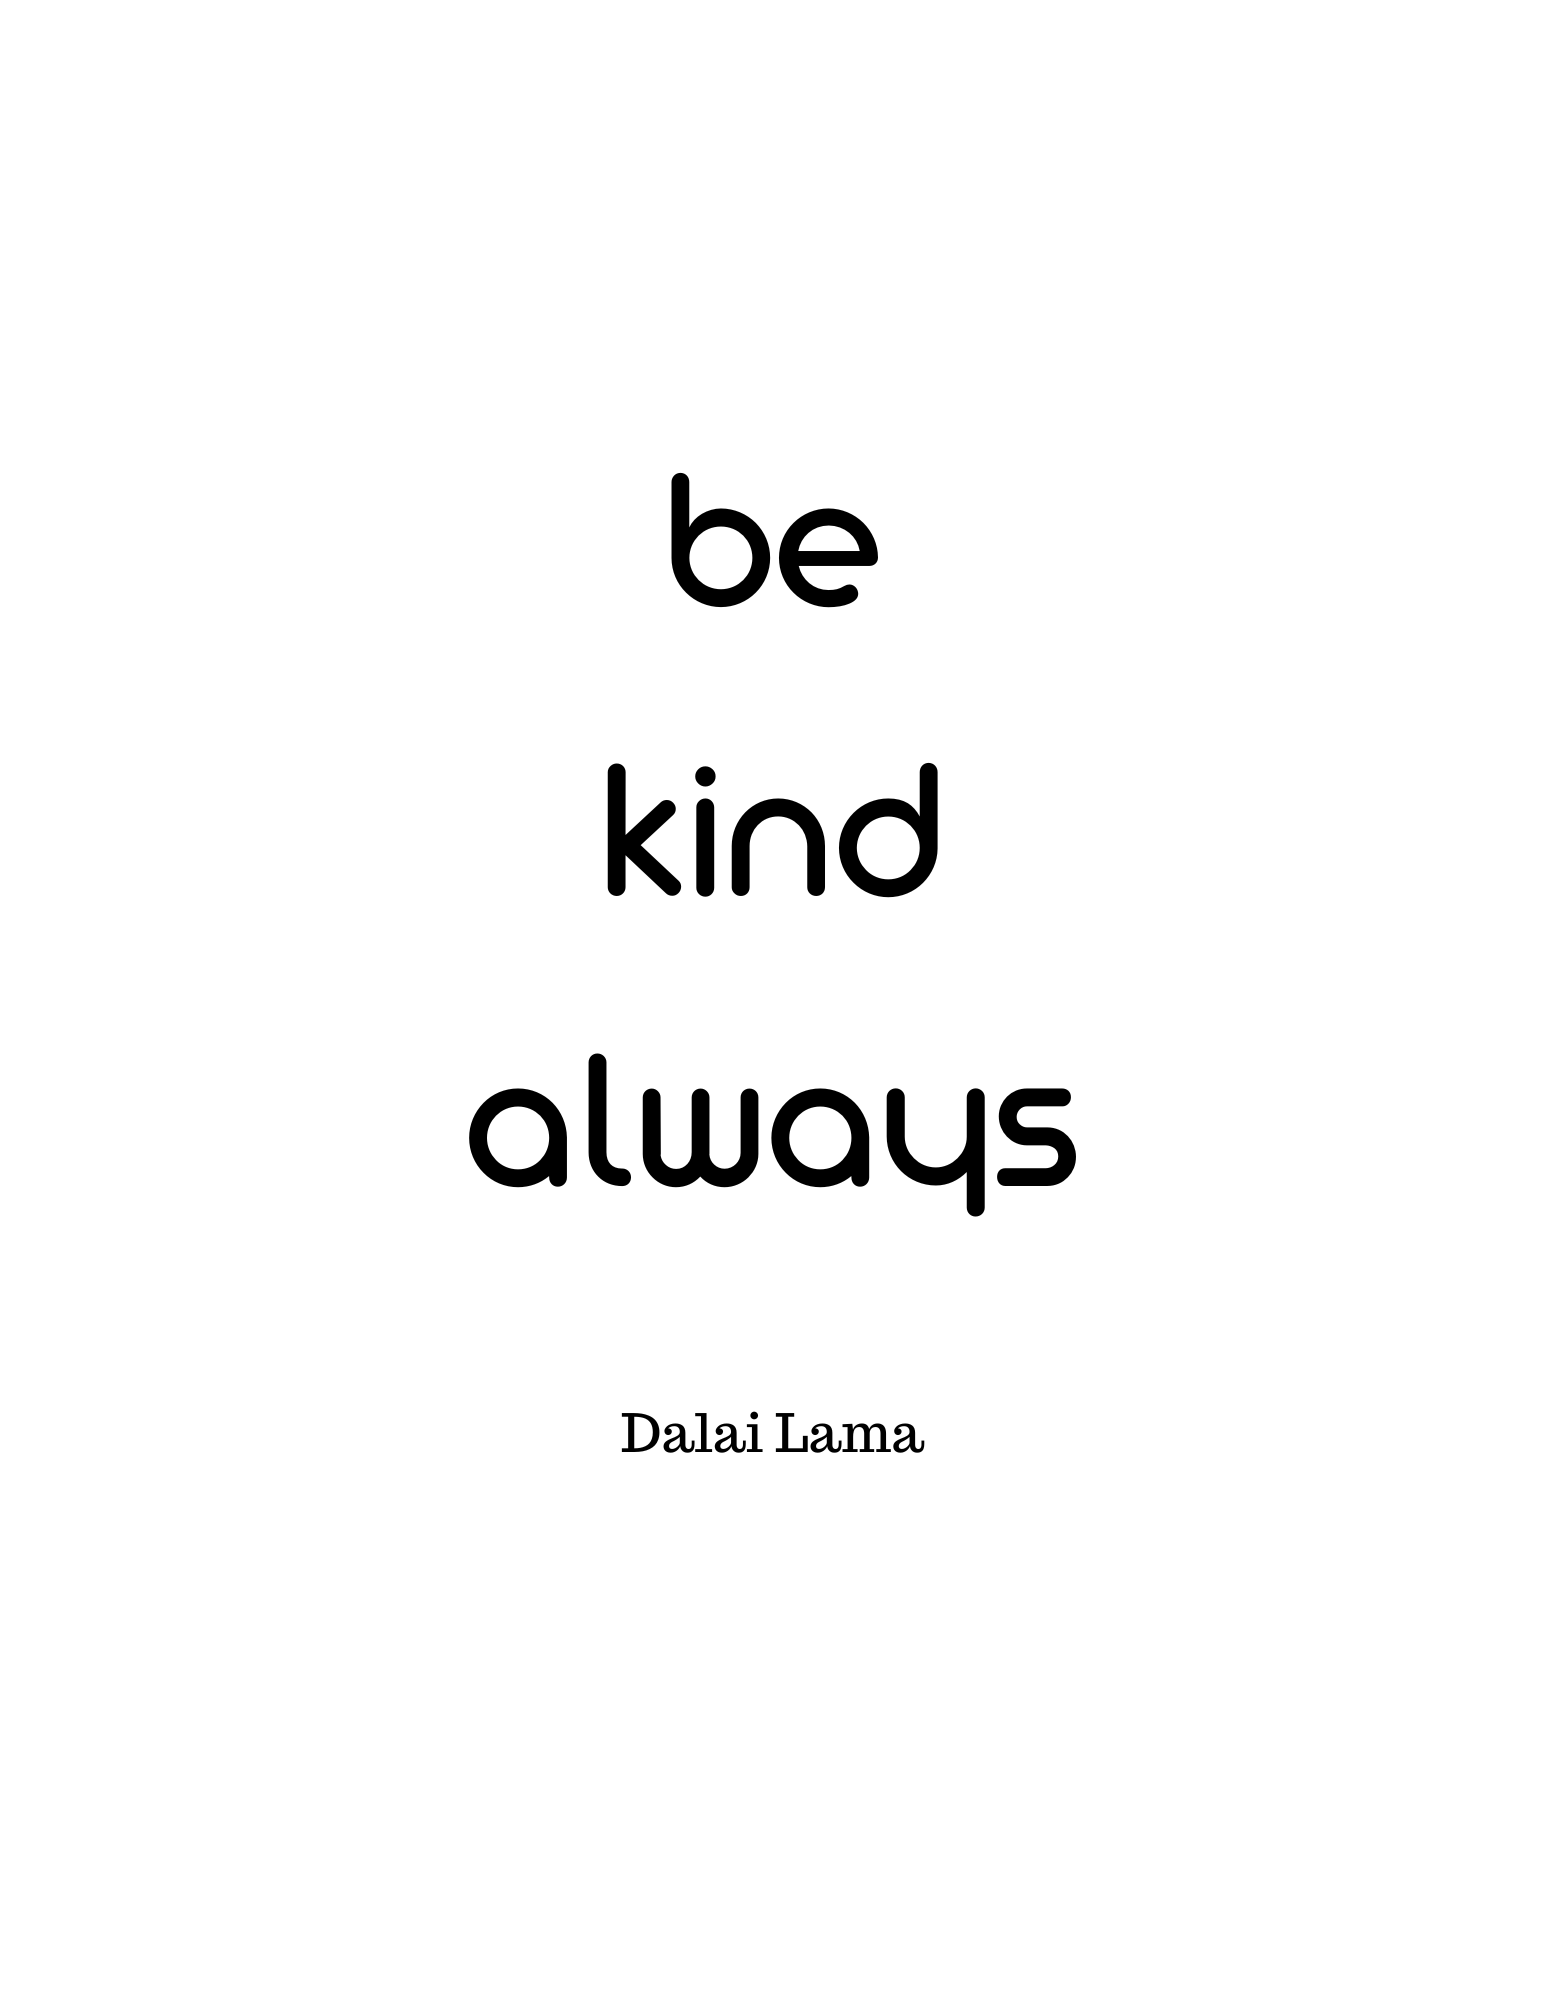 Be kind always - Dalai Lama